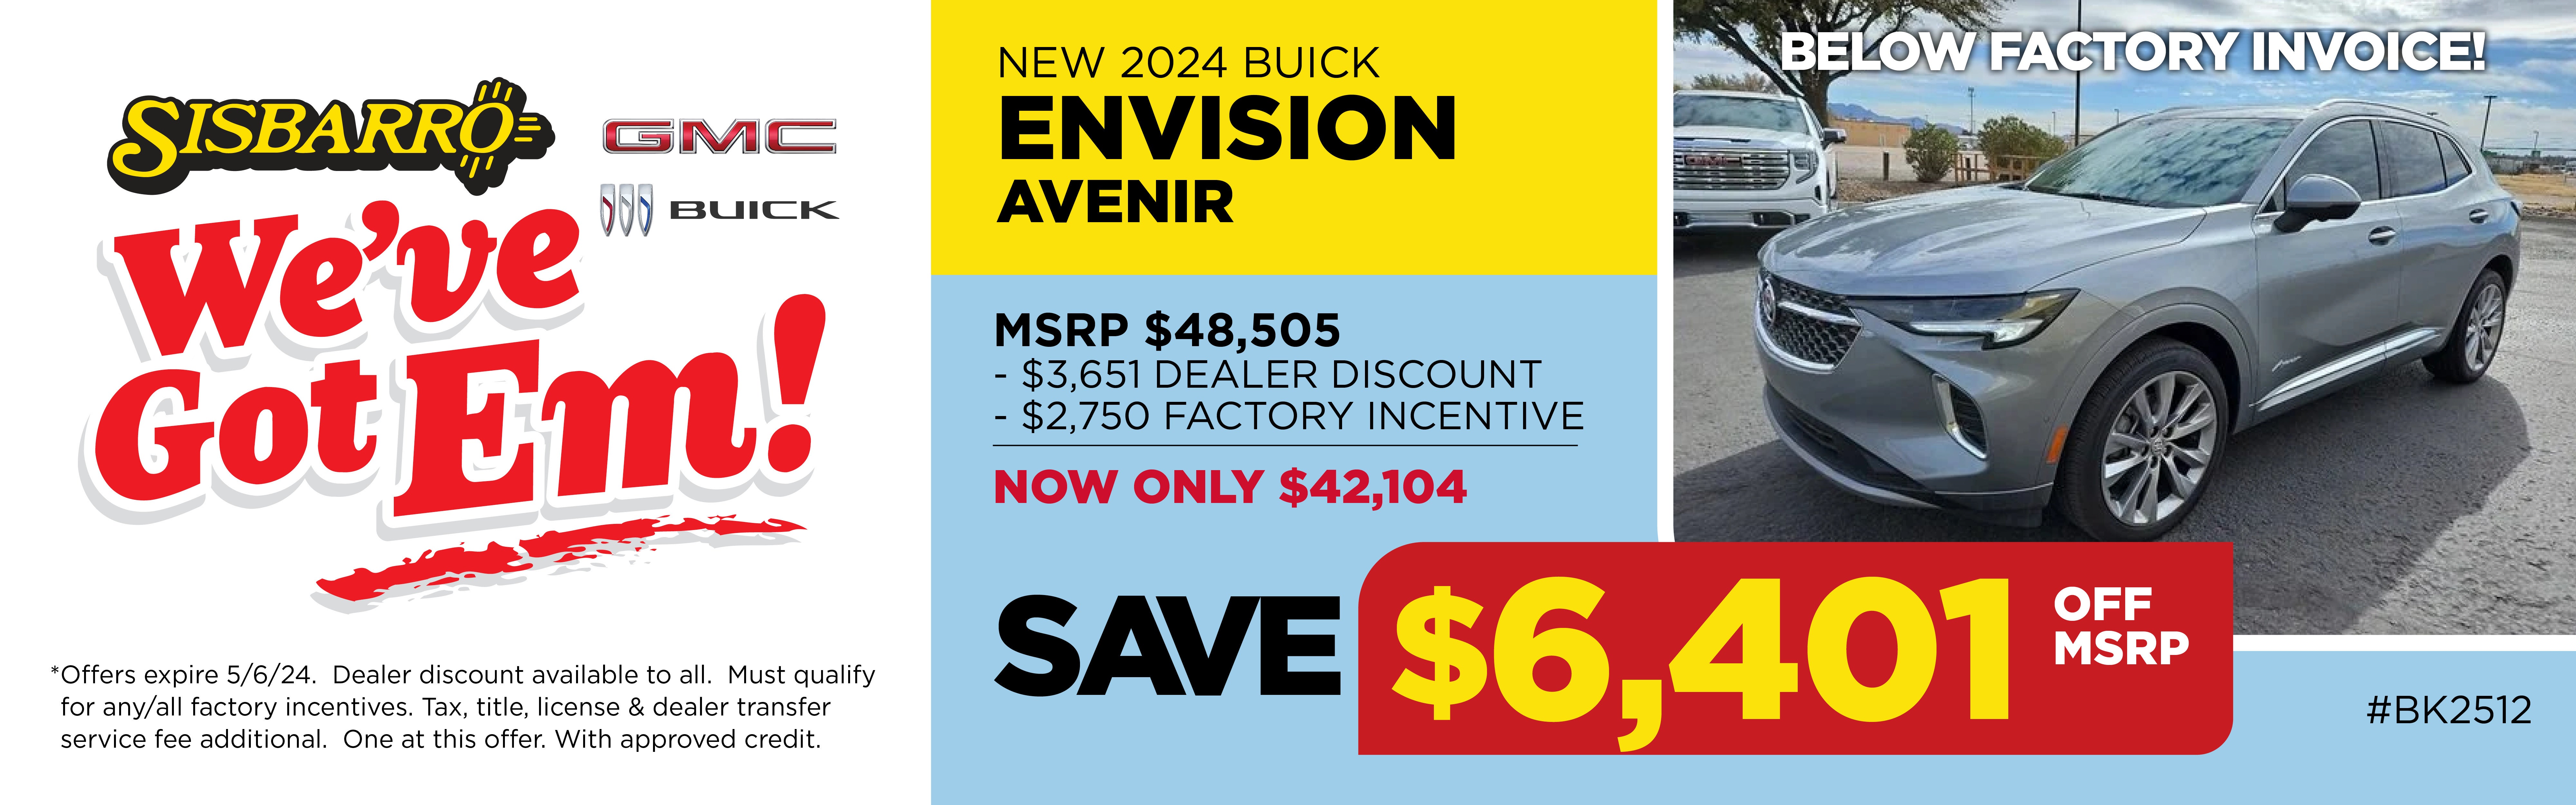 New 2024 Buick Envision Avenir